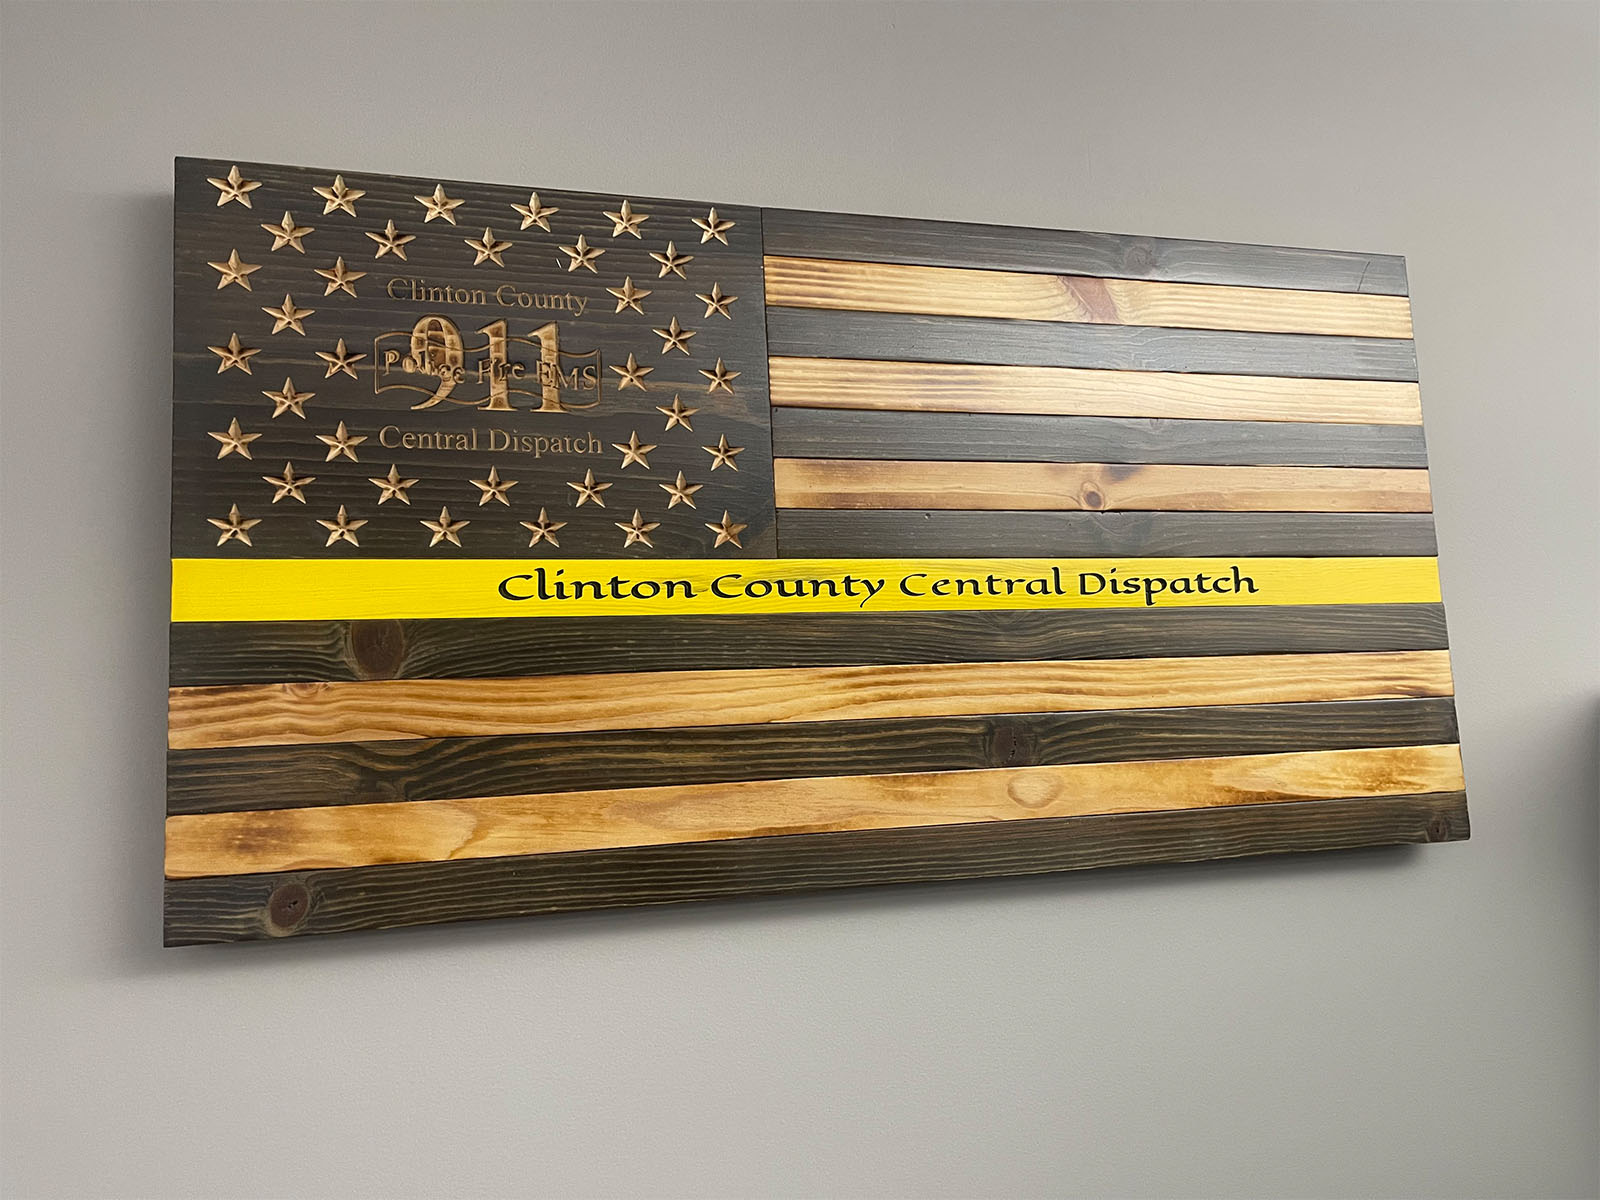 Clinton County 911 Photo 2